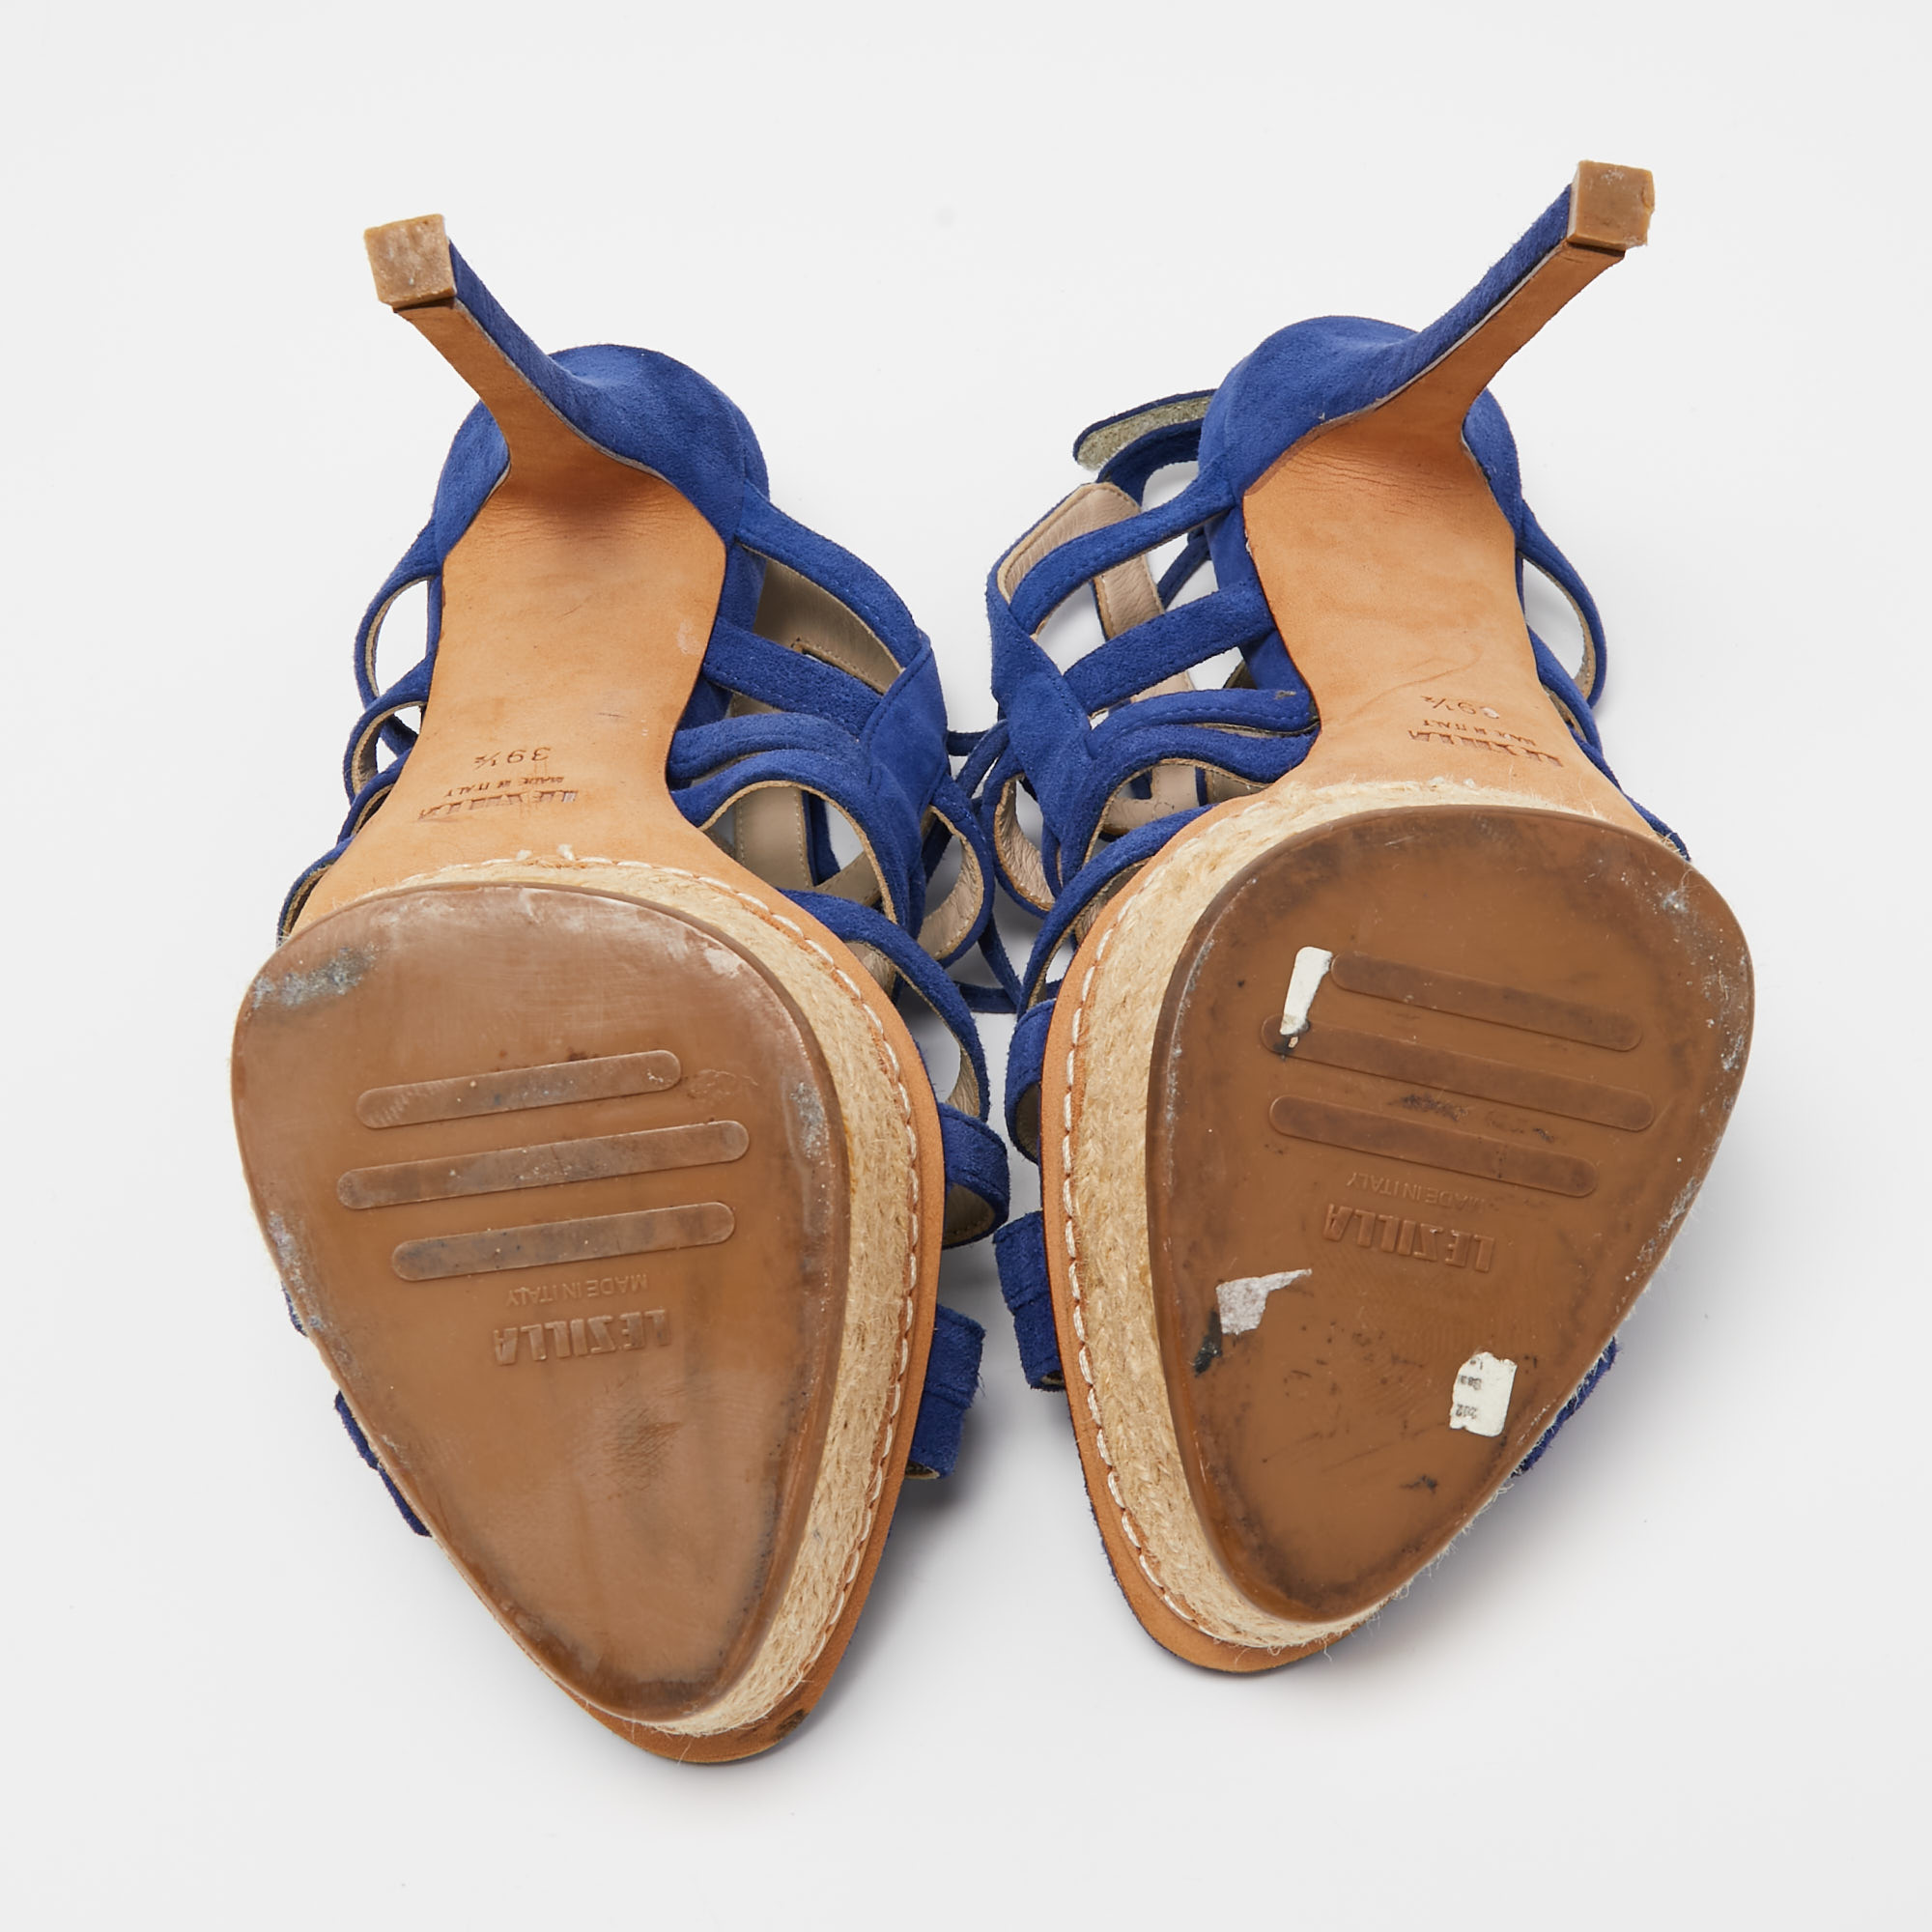 Le Silla Blue Suede Strappy Platform Sandals Size 39.5